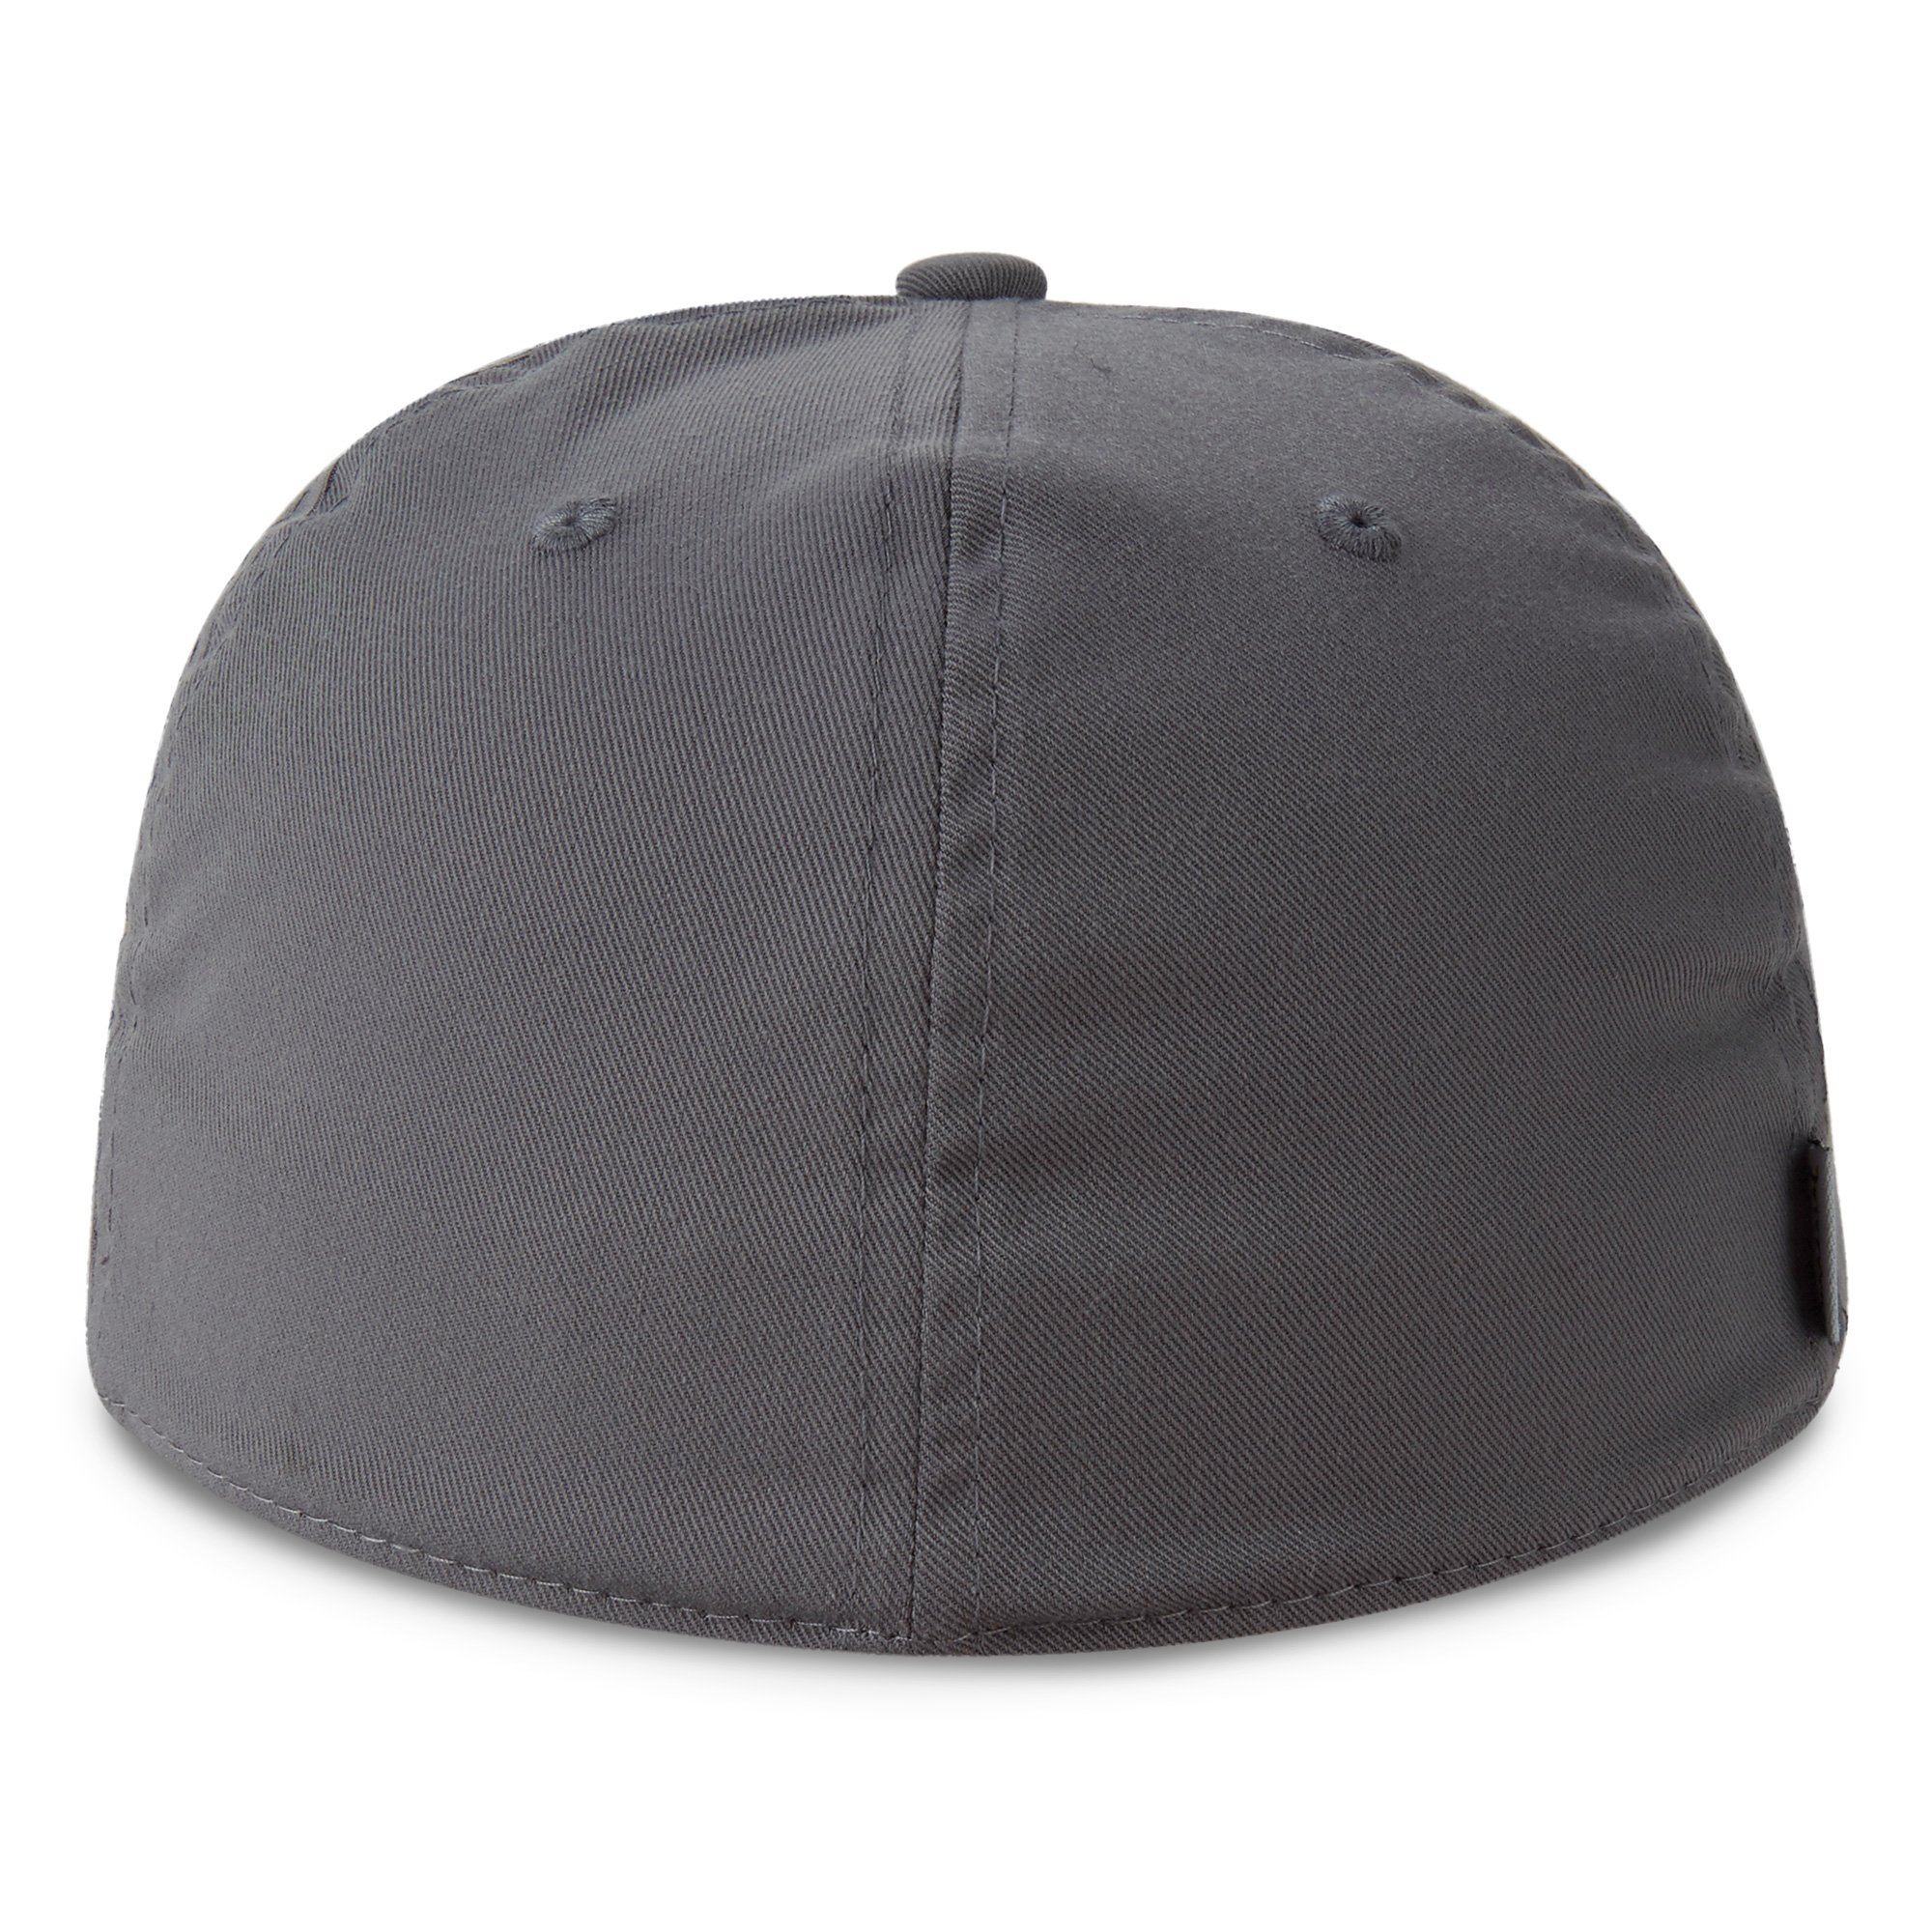 The Encore 2100 - Lightweight Stretch Cotton, Flexible Fit Hat